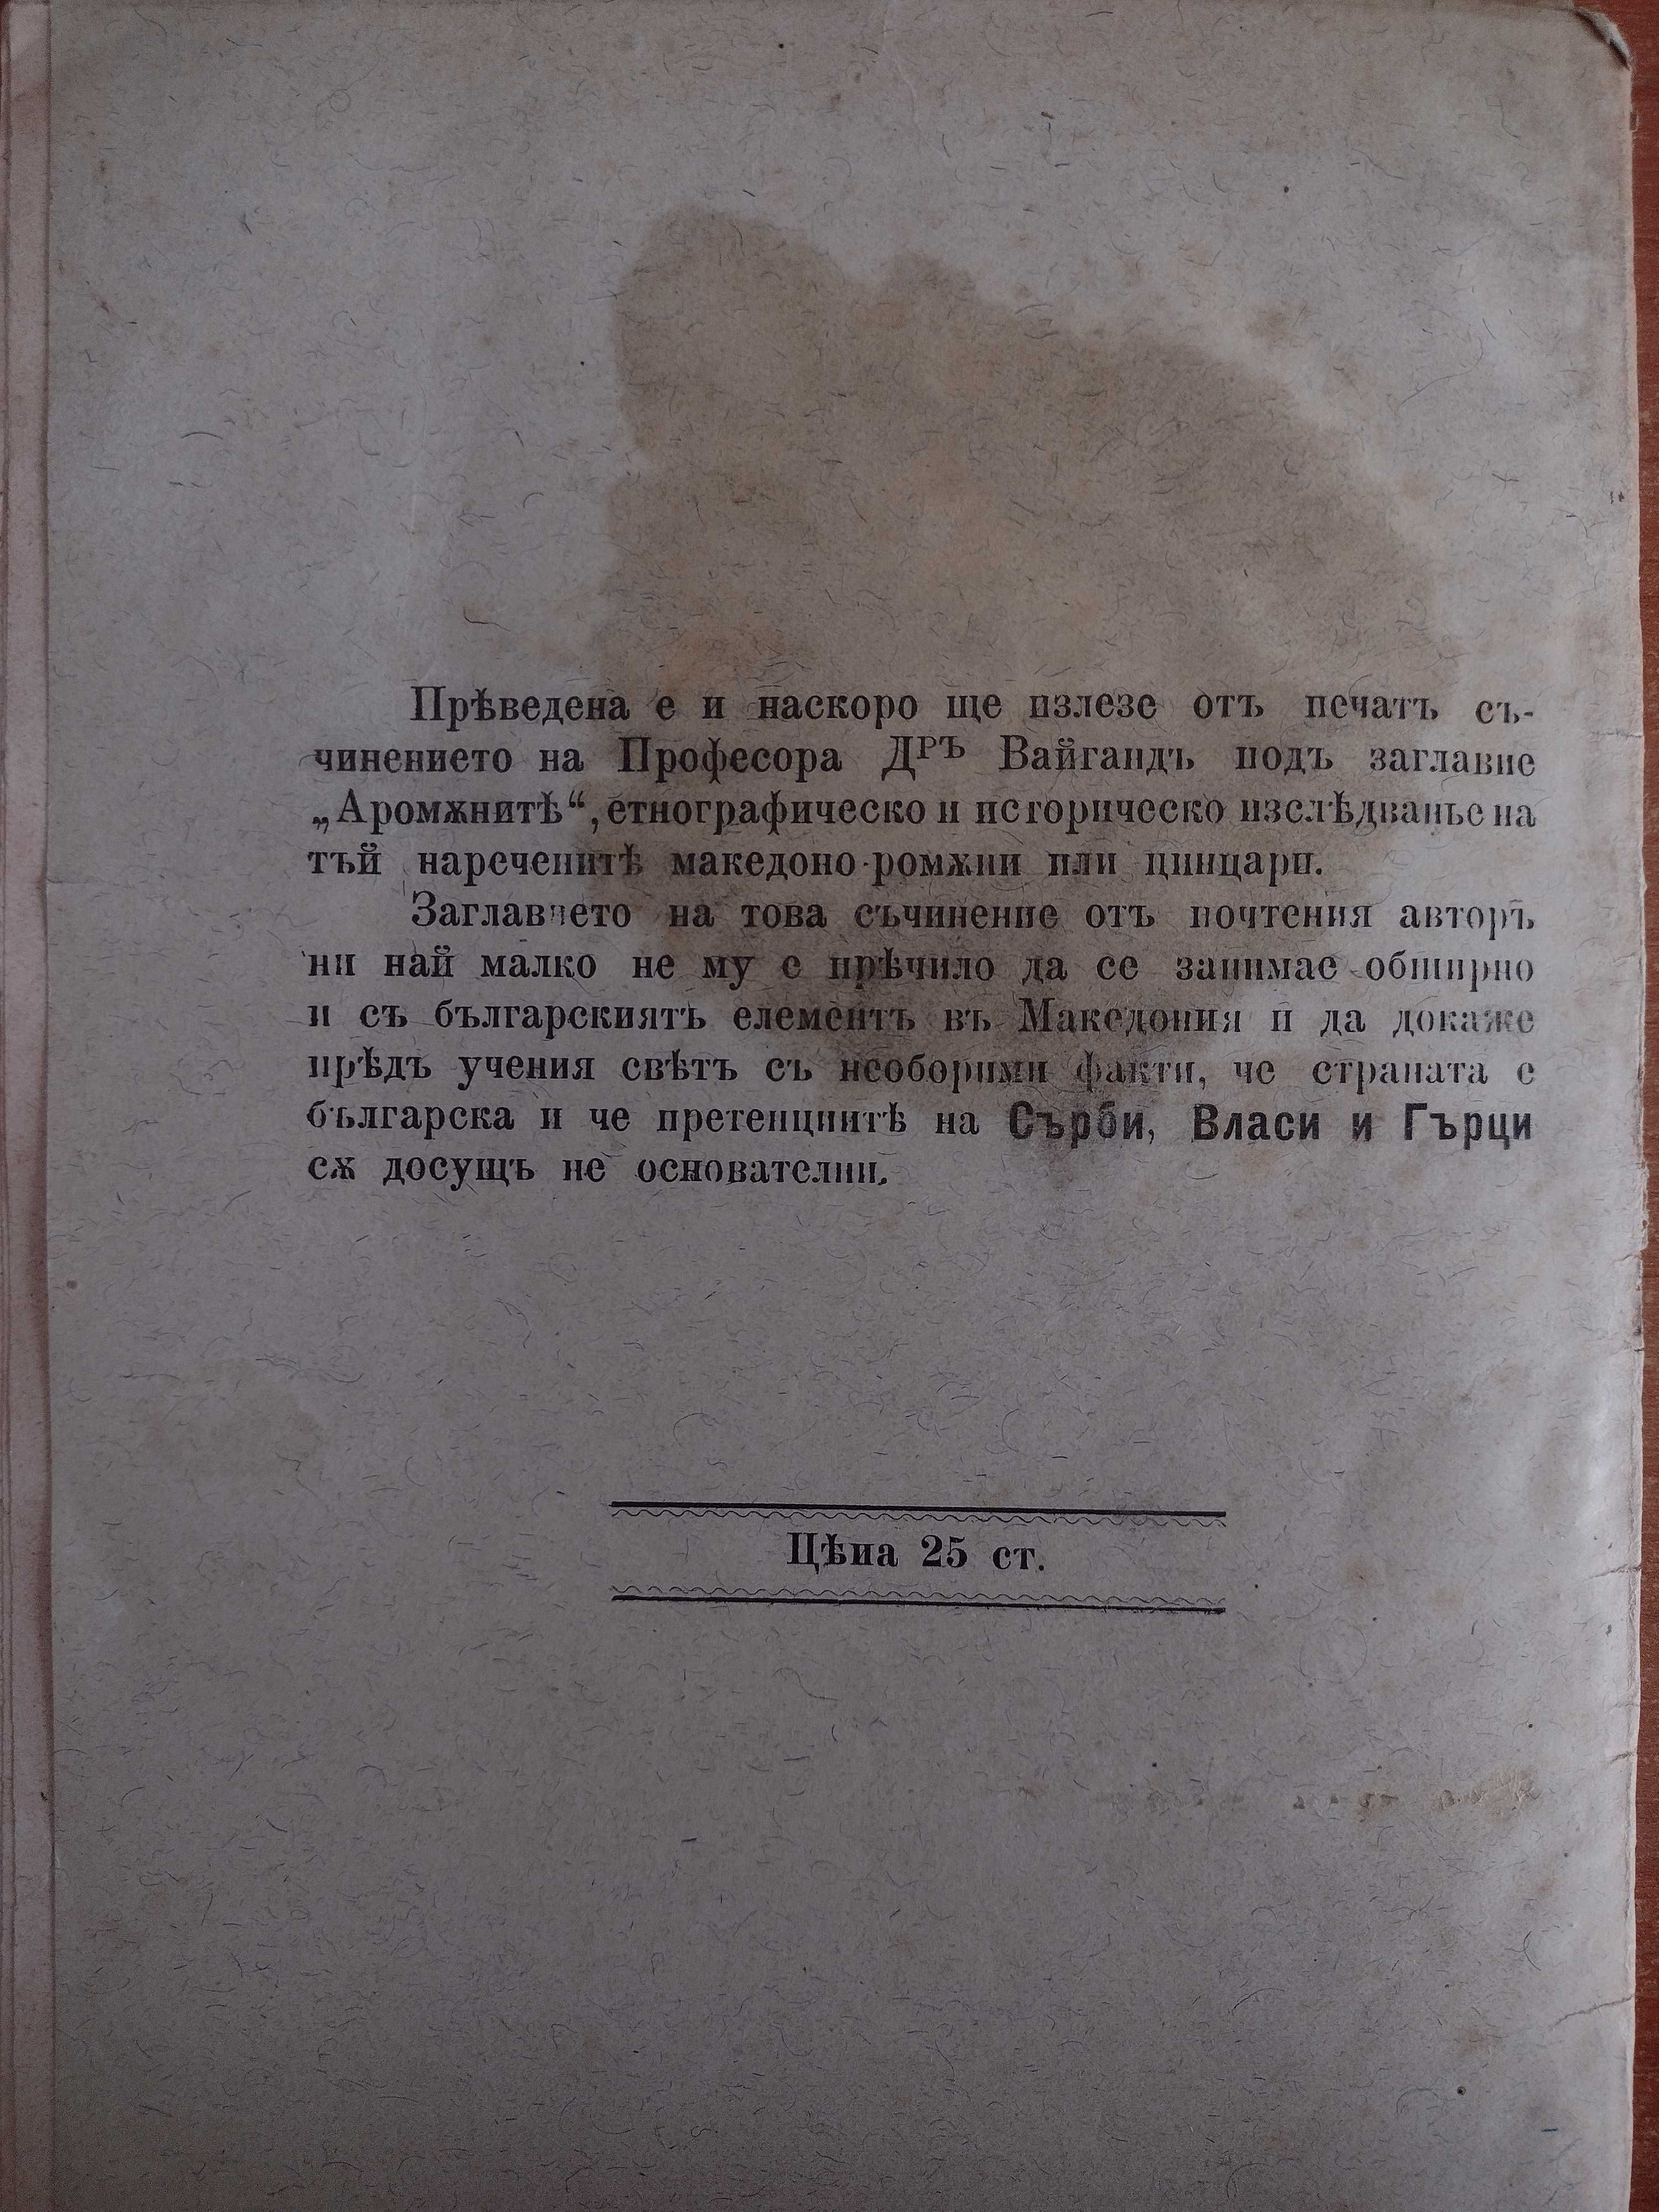 Нац. стремления на народите в Балканския полуостров
проф Вайганд, 1898